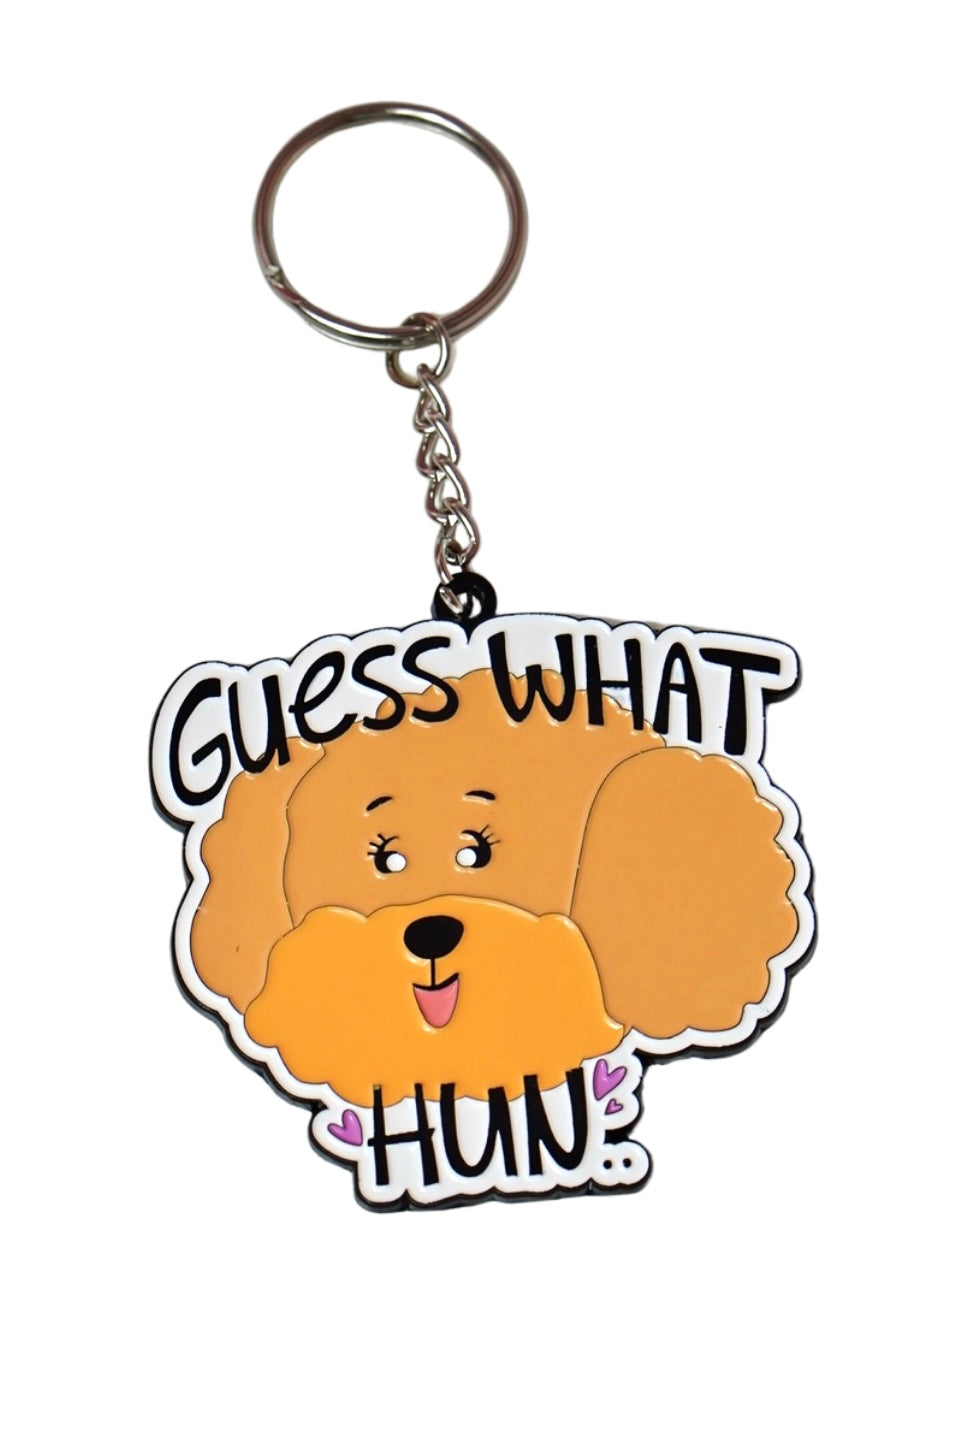 Key Ring - Guess What Hun..